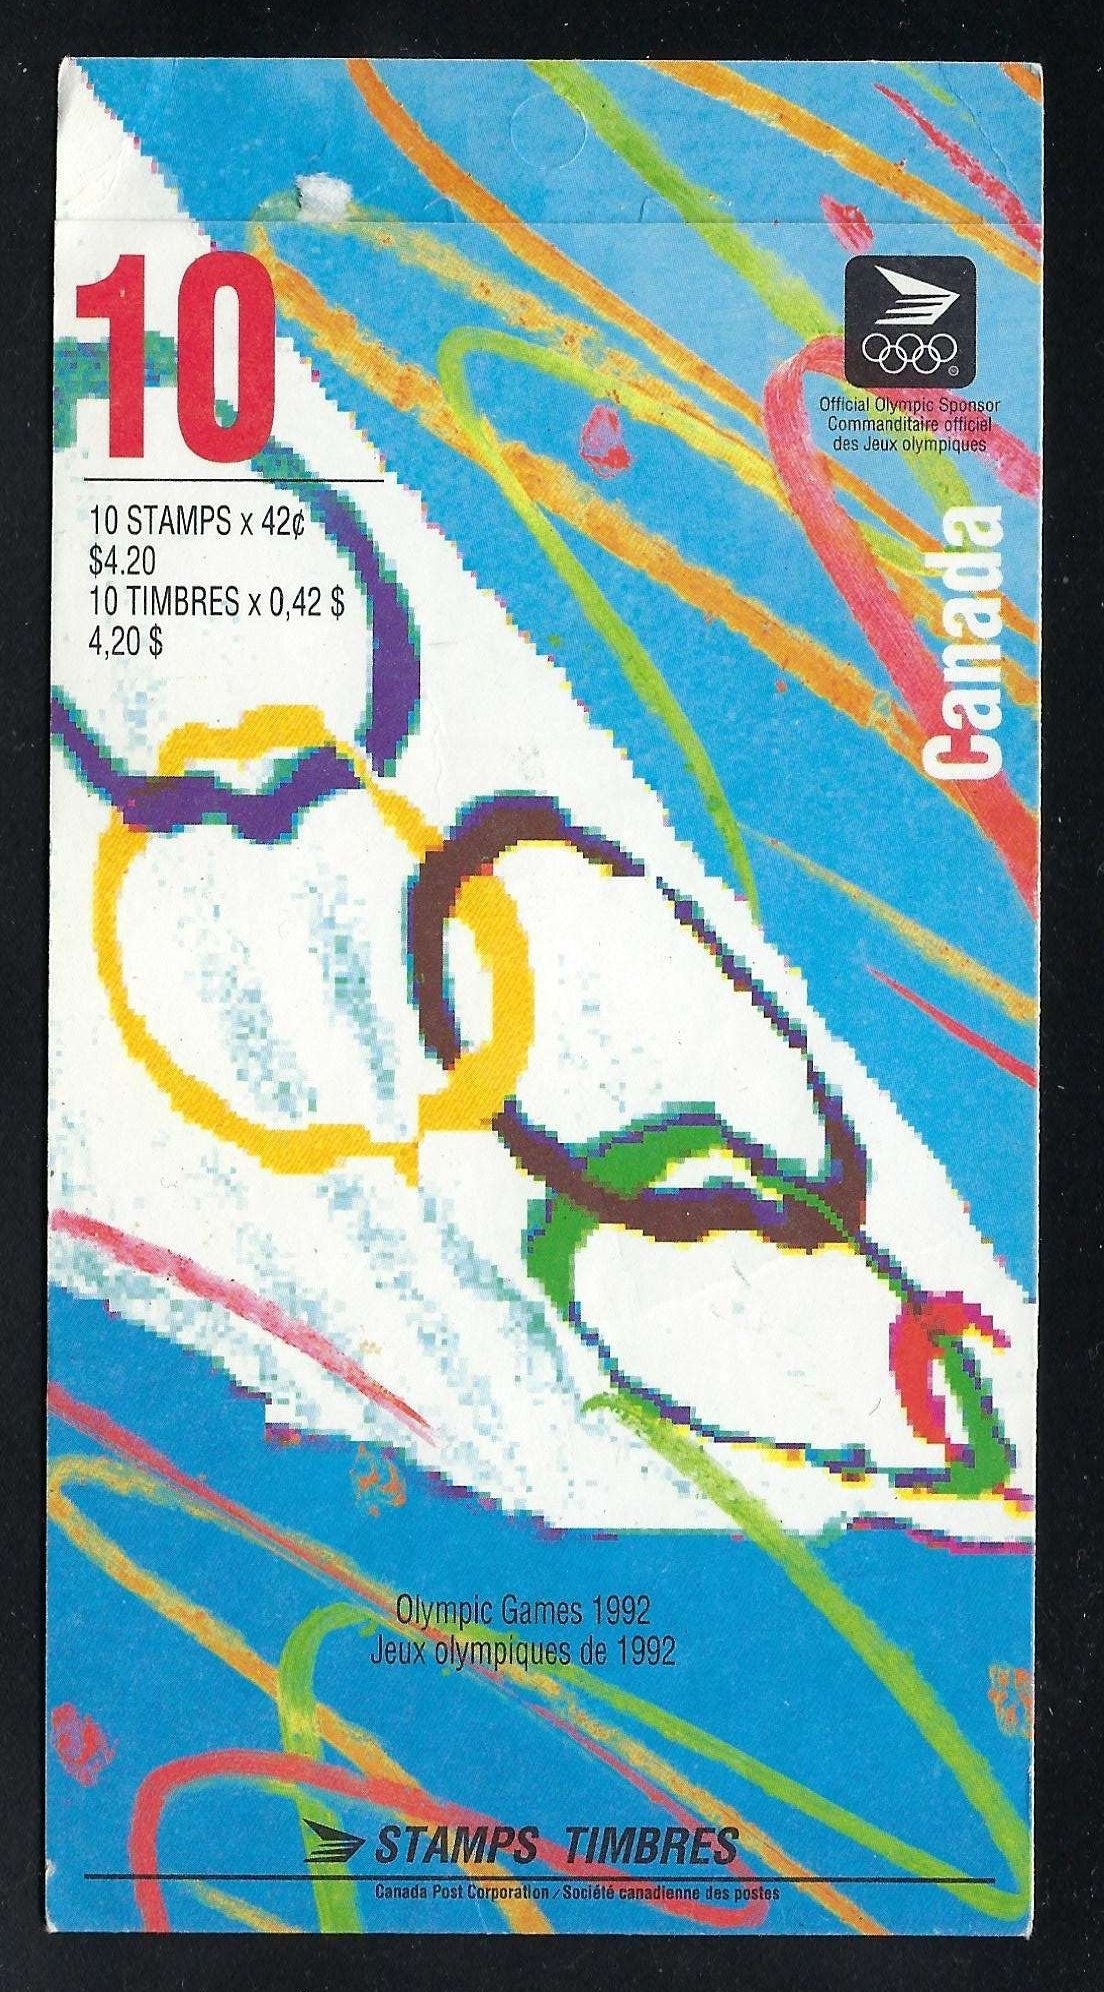 BK146d - 42¢ Olympic Summer Games